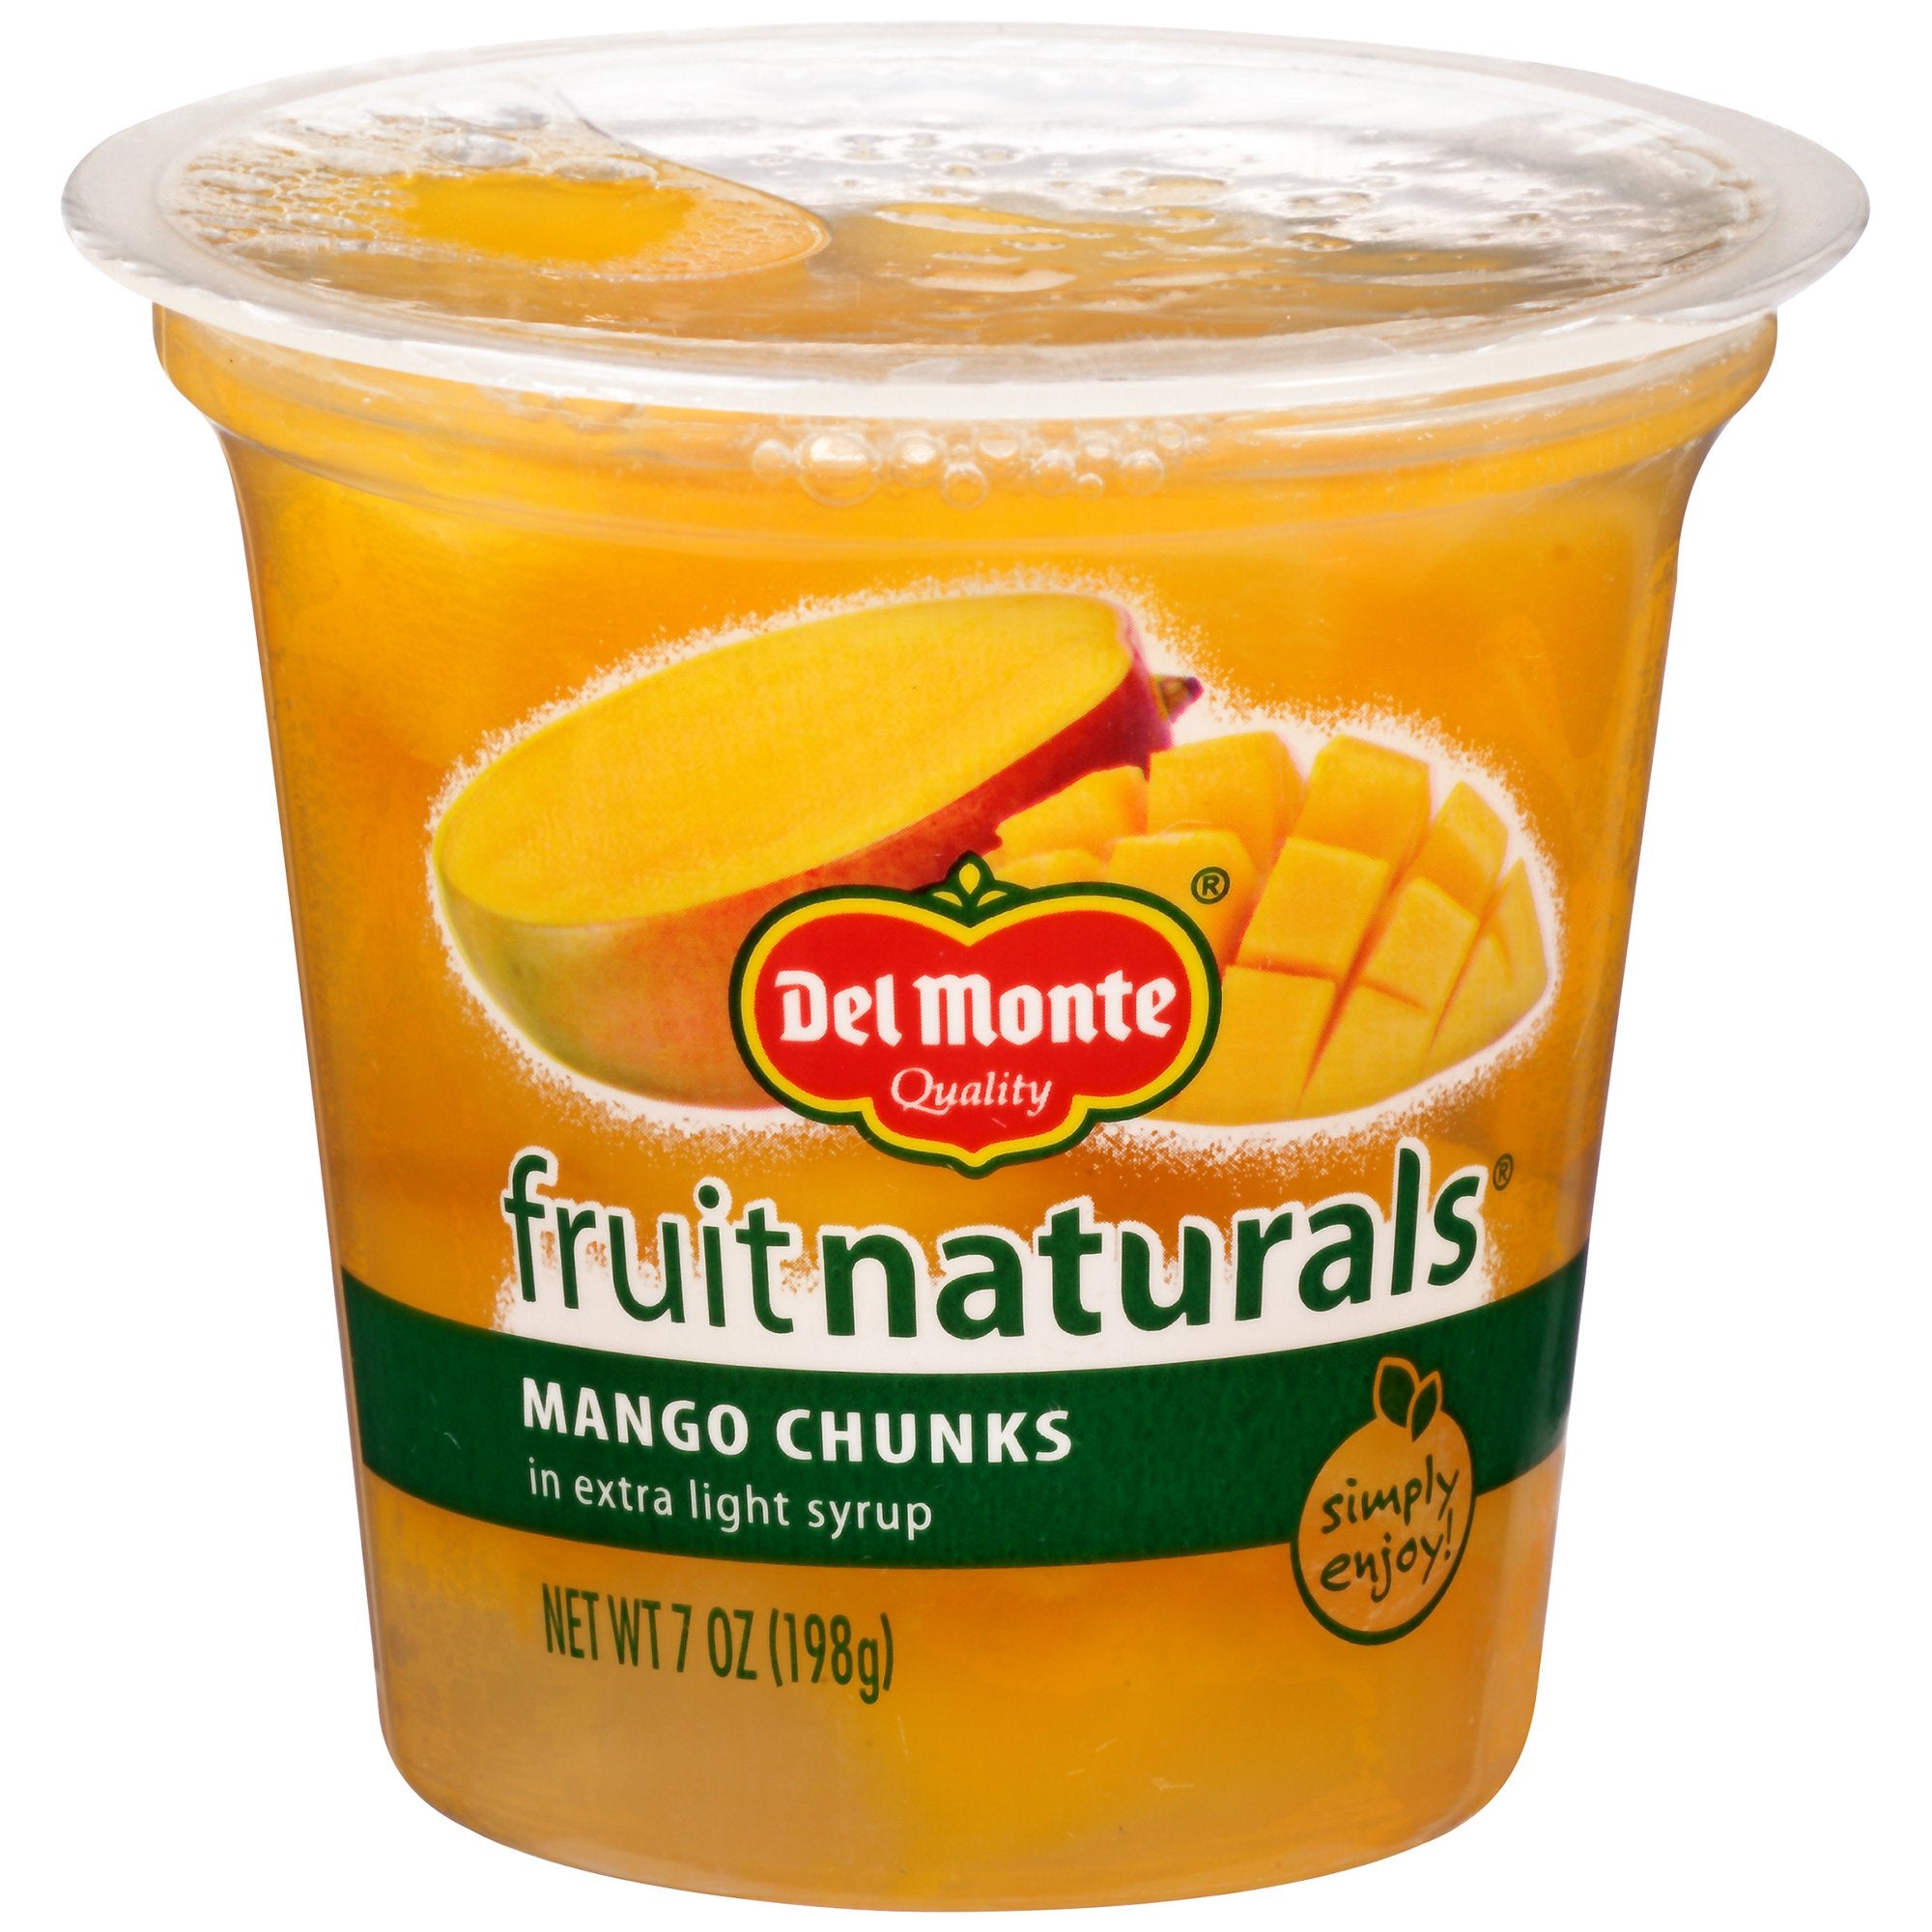 Mango/Fruit Naturals